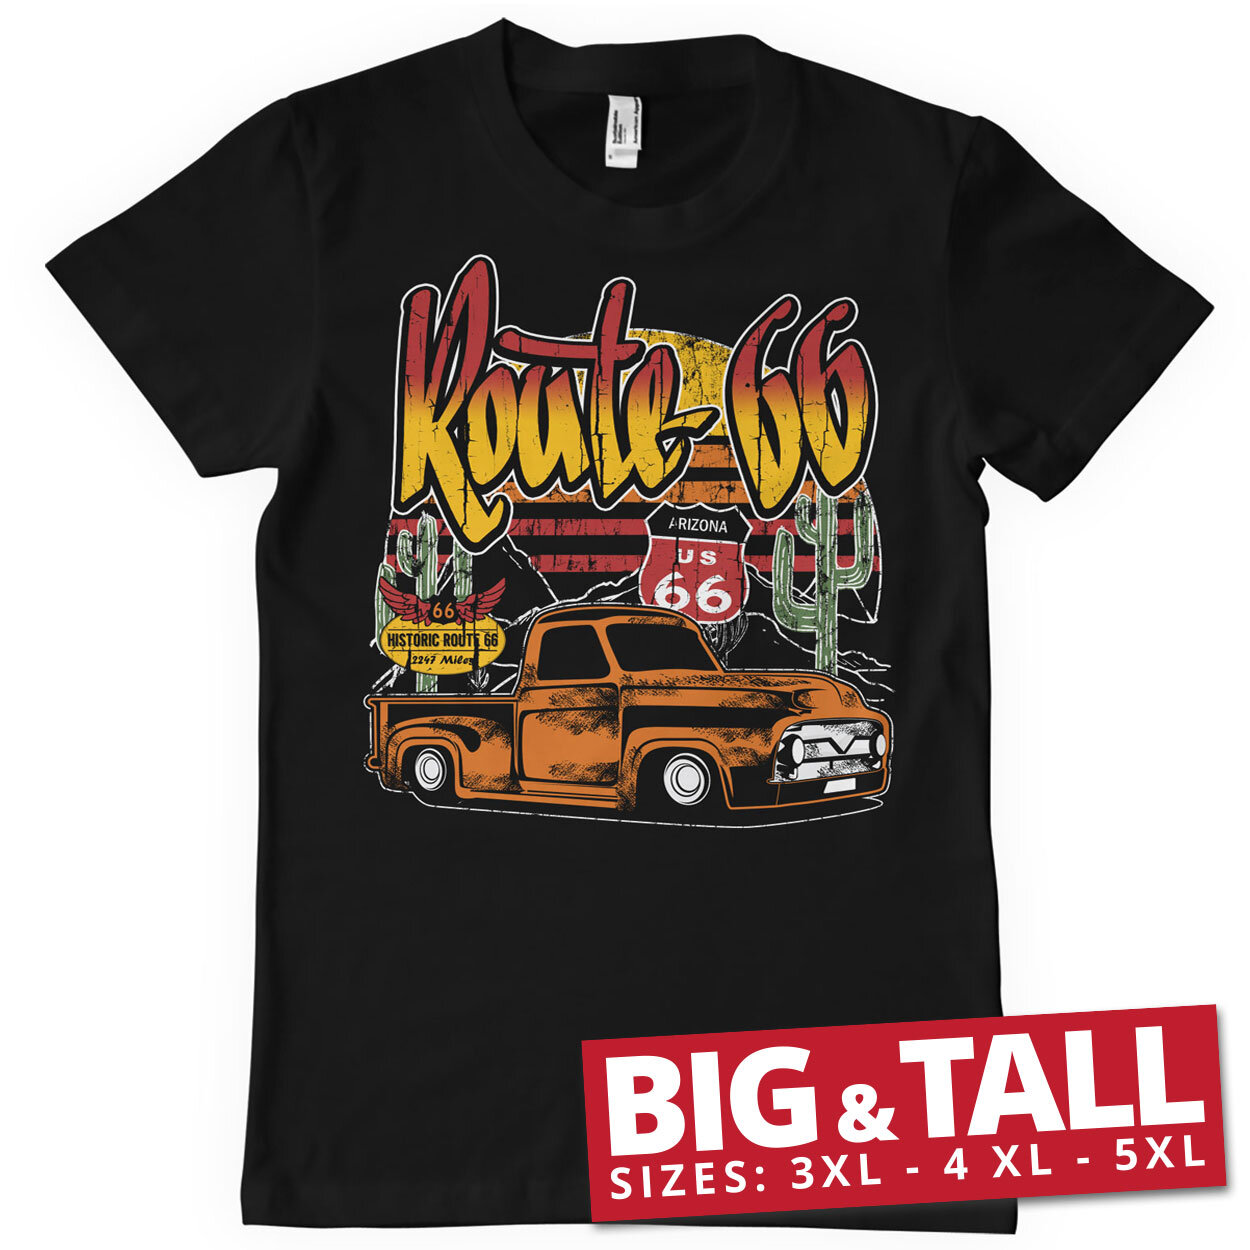 Route 66 - Arizona Pick-Up Big & Tall T-Shirt